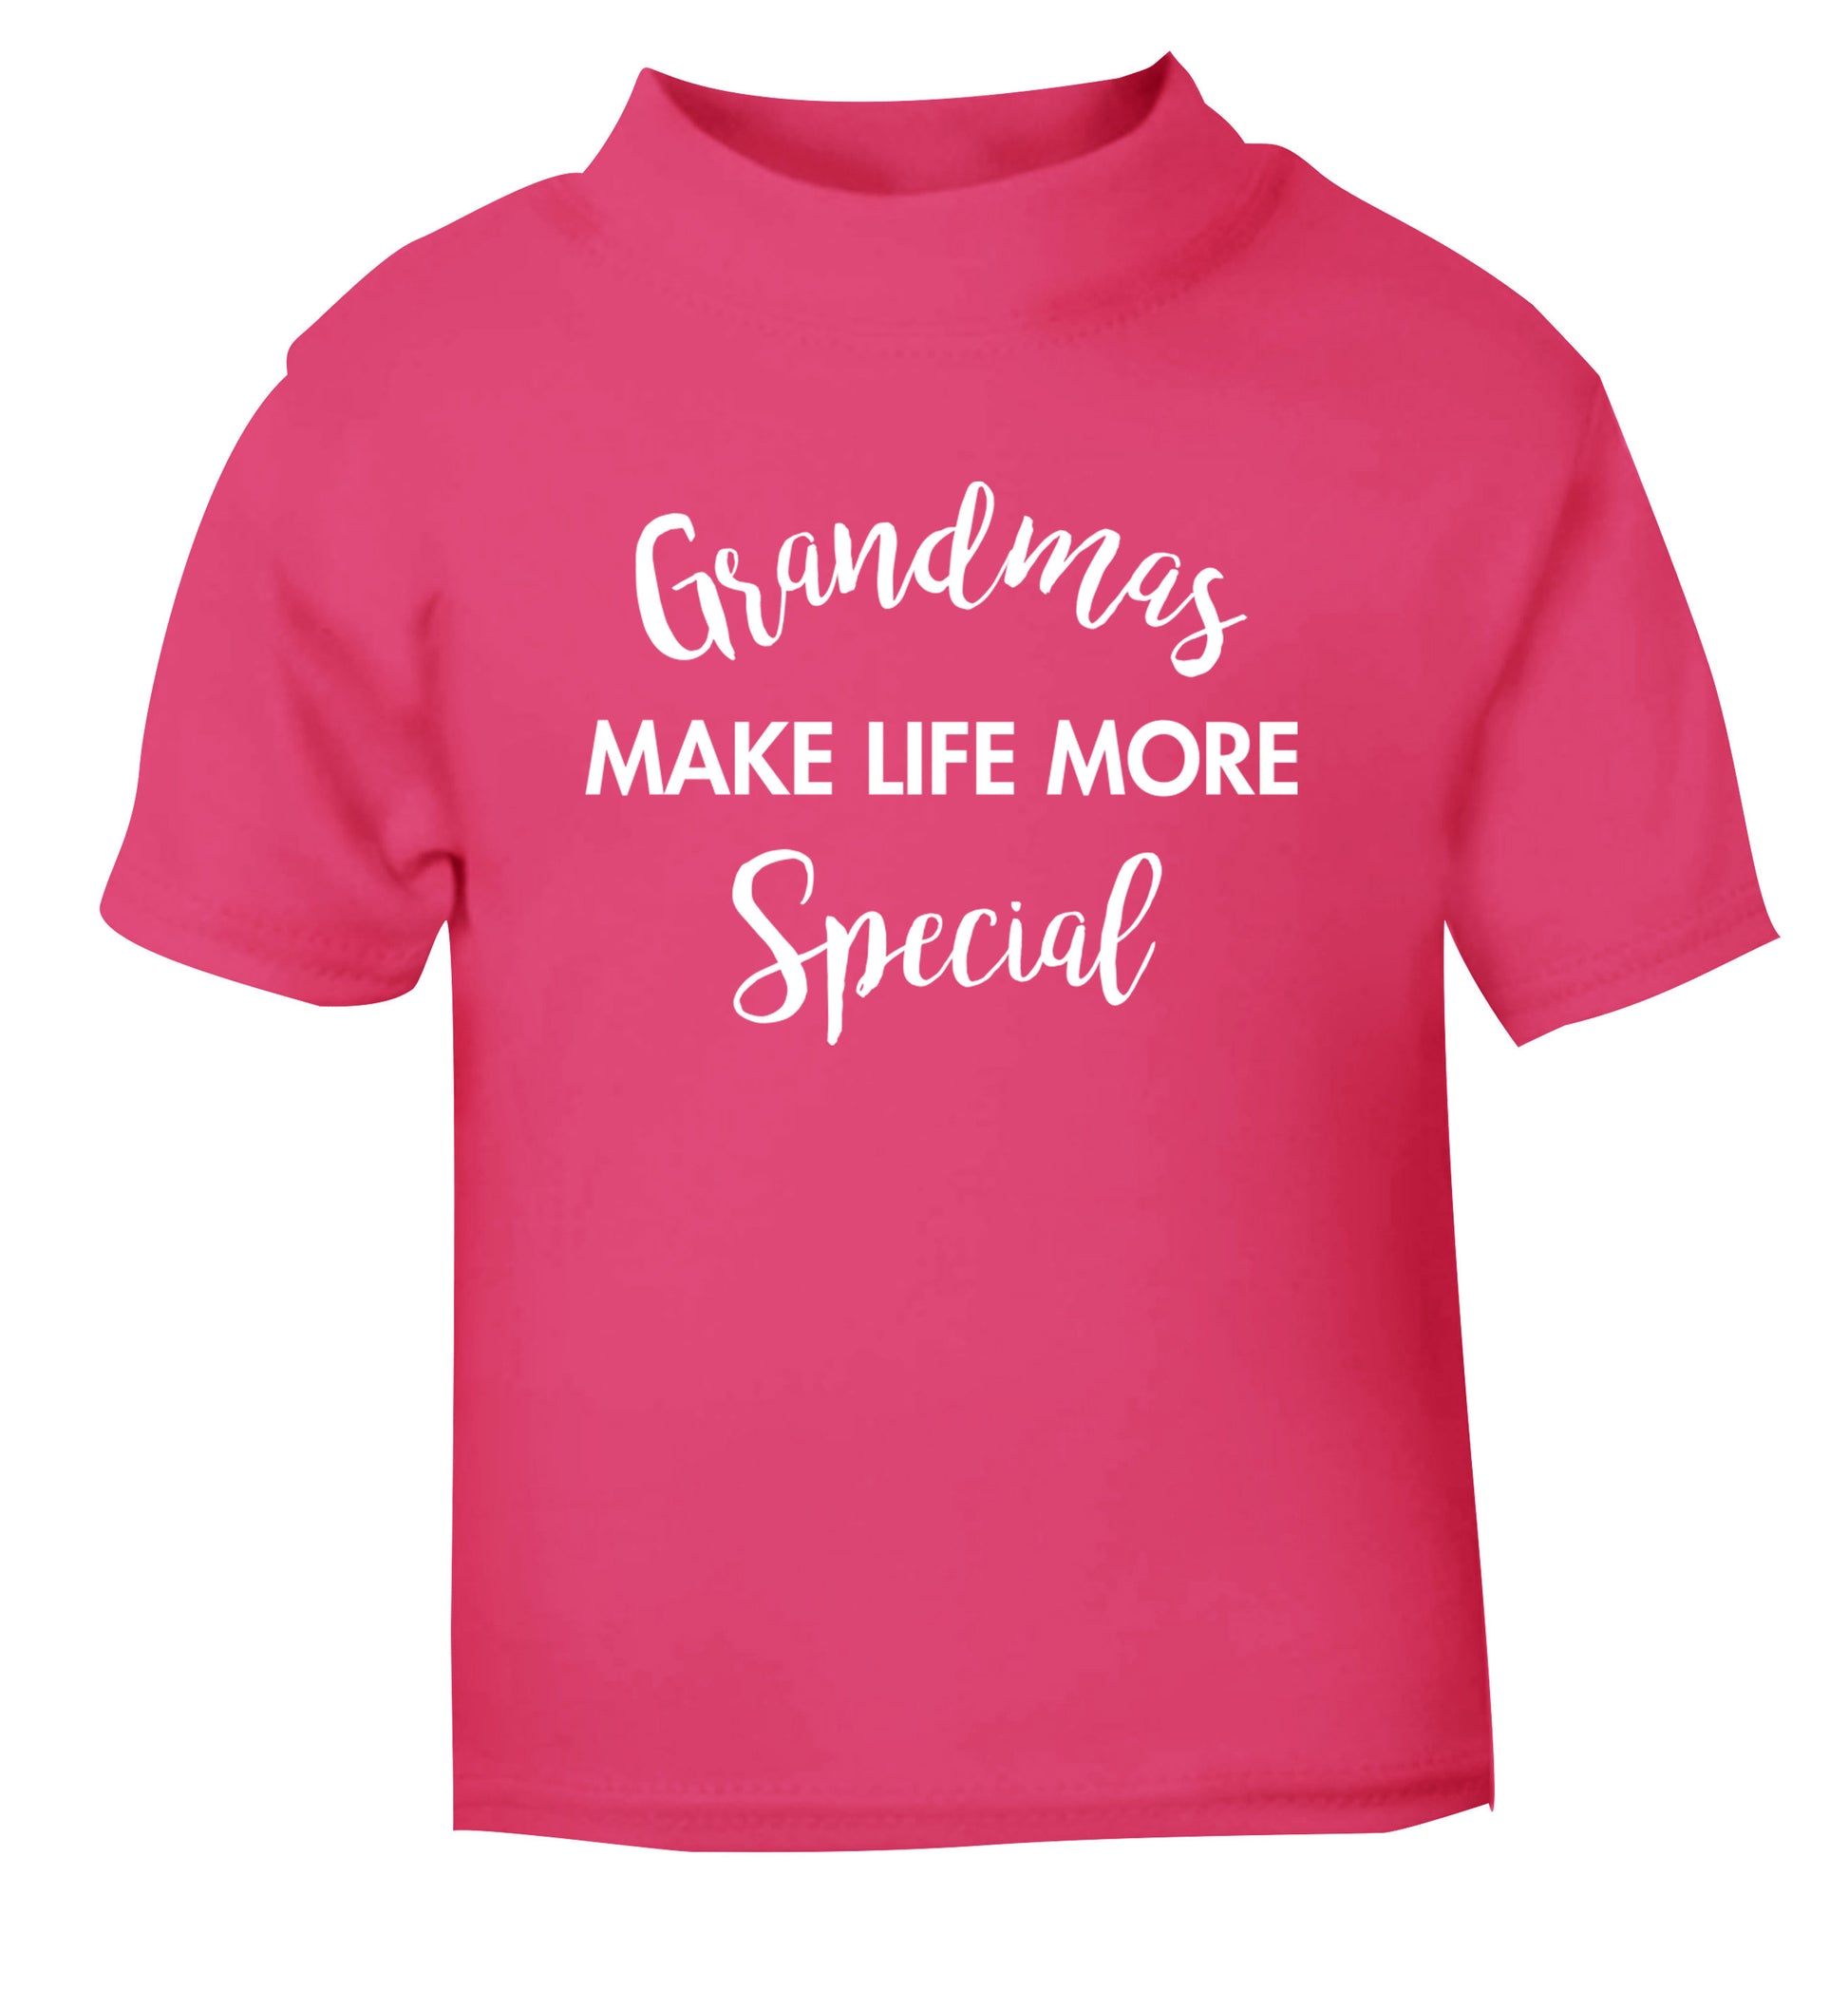 Grandmas make life more special pink Baby Toddler Tshirt 2 Years